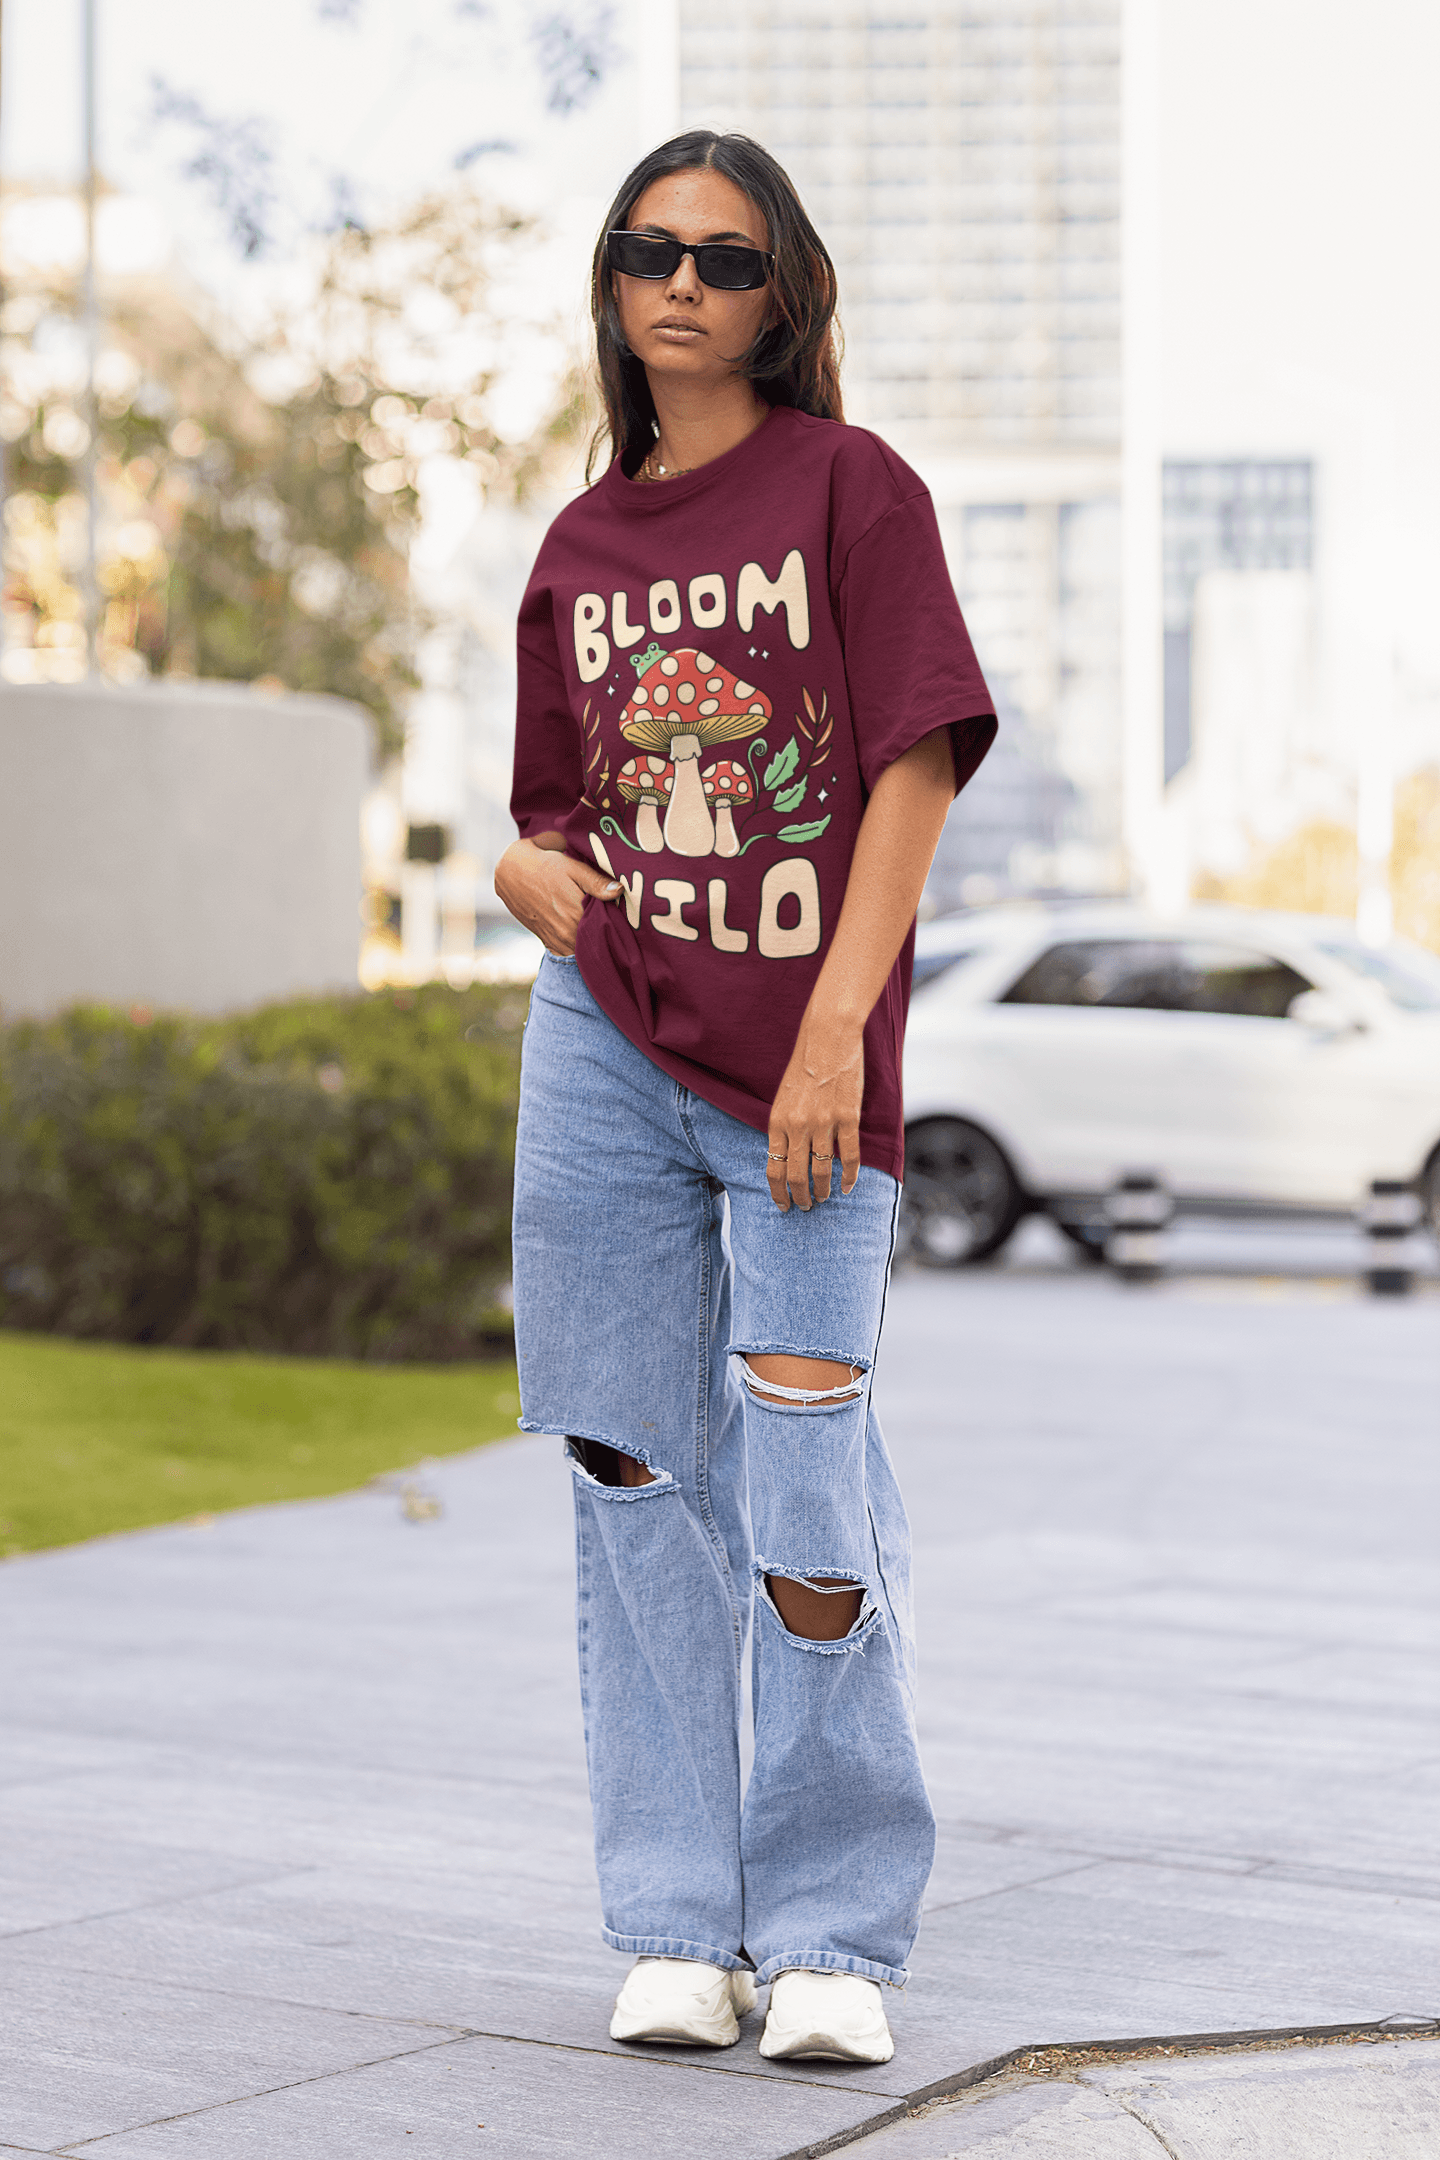 Bloom Wild Unisex T-shirts- Oversized Fits